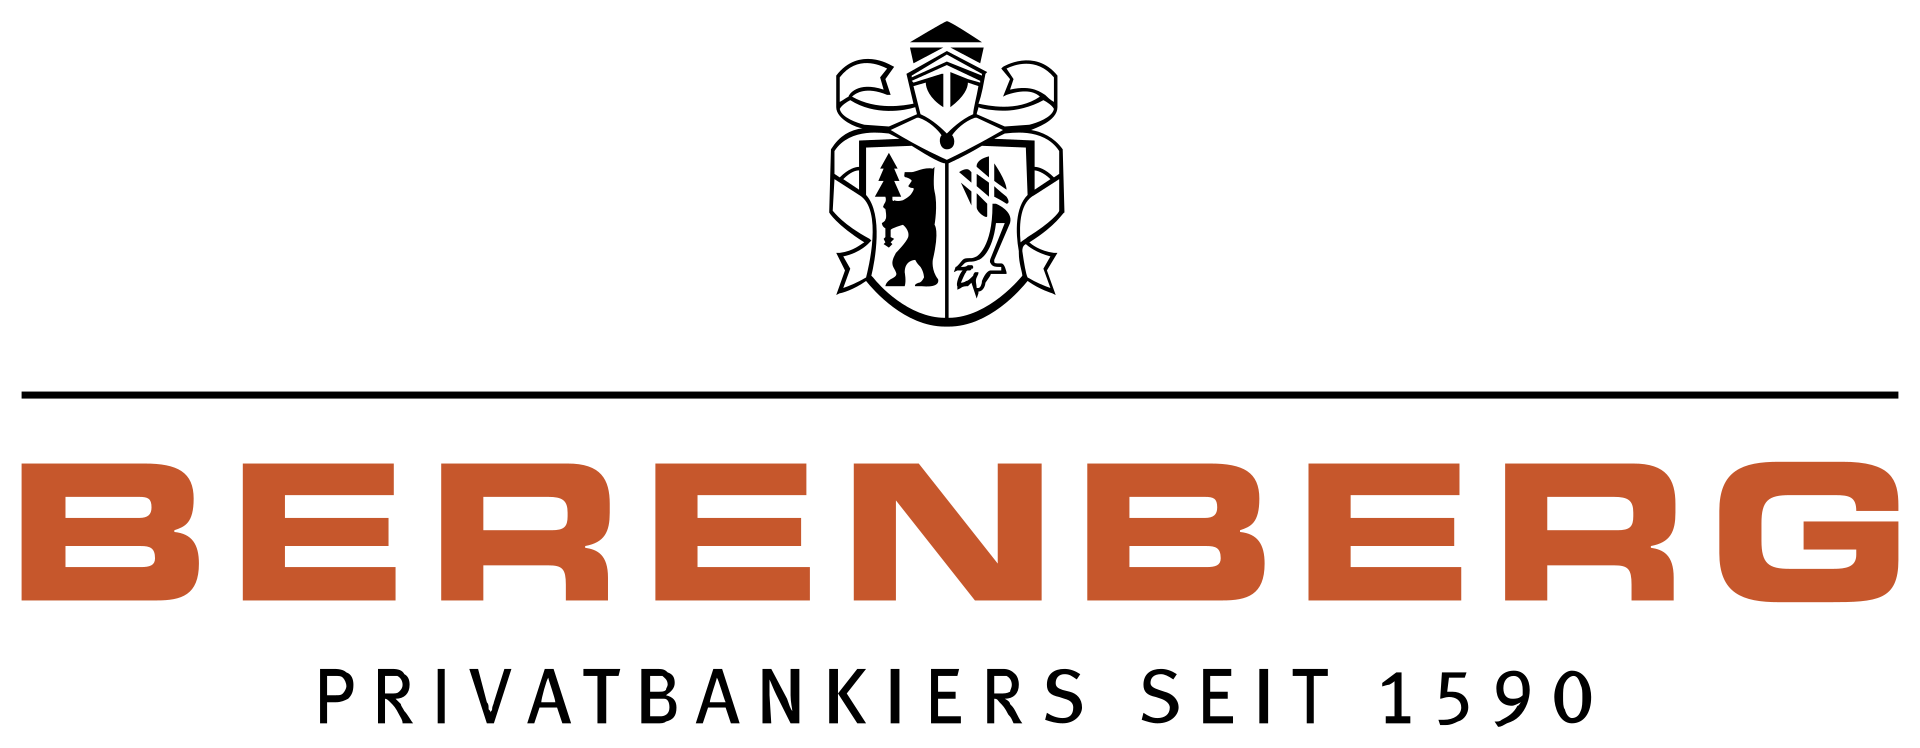 Berenberg_Bank_logo